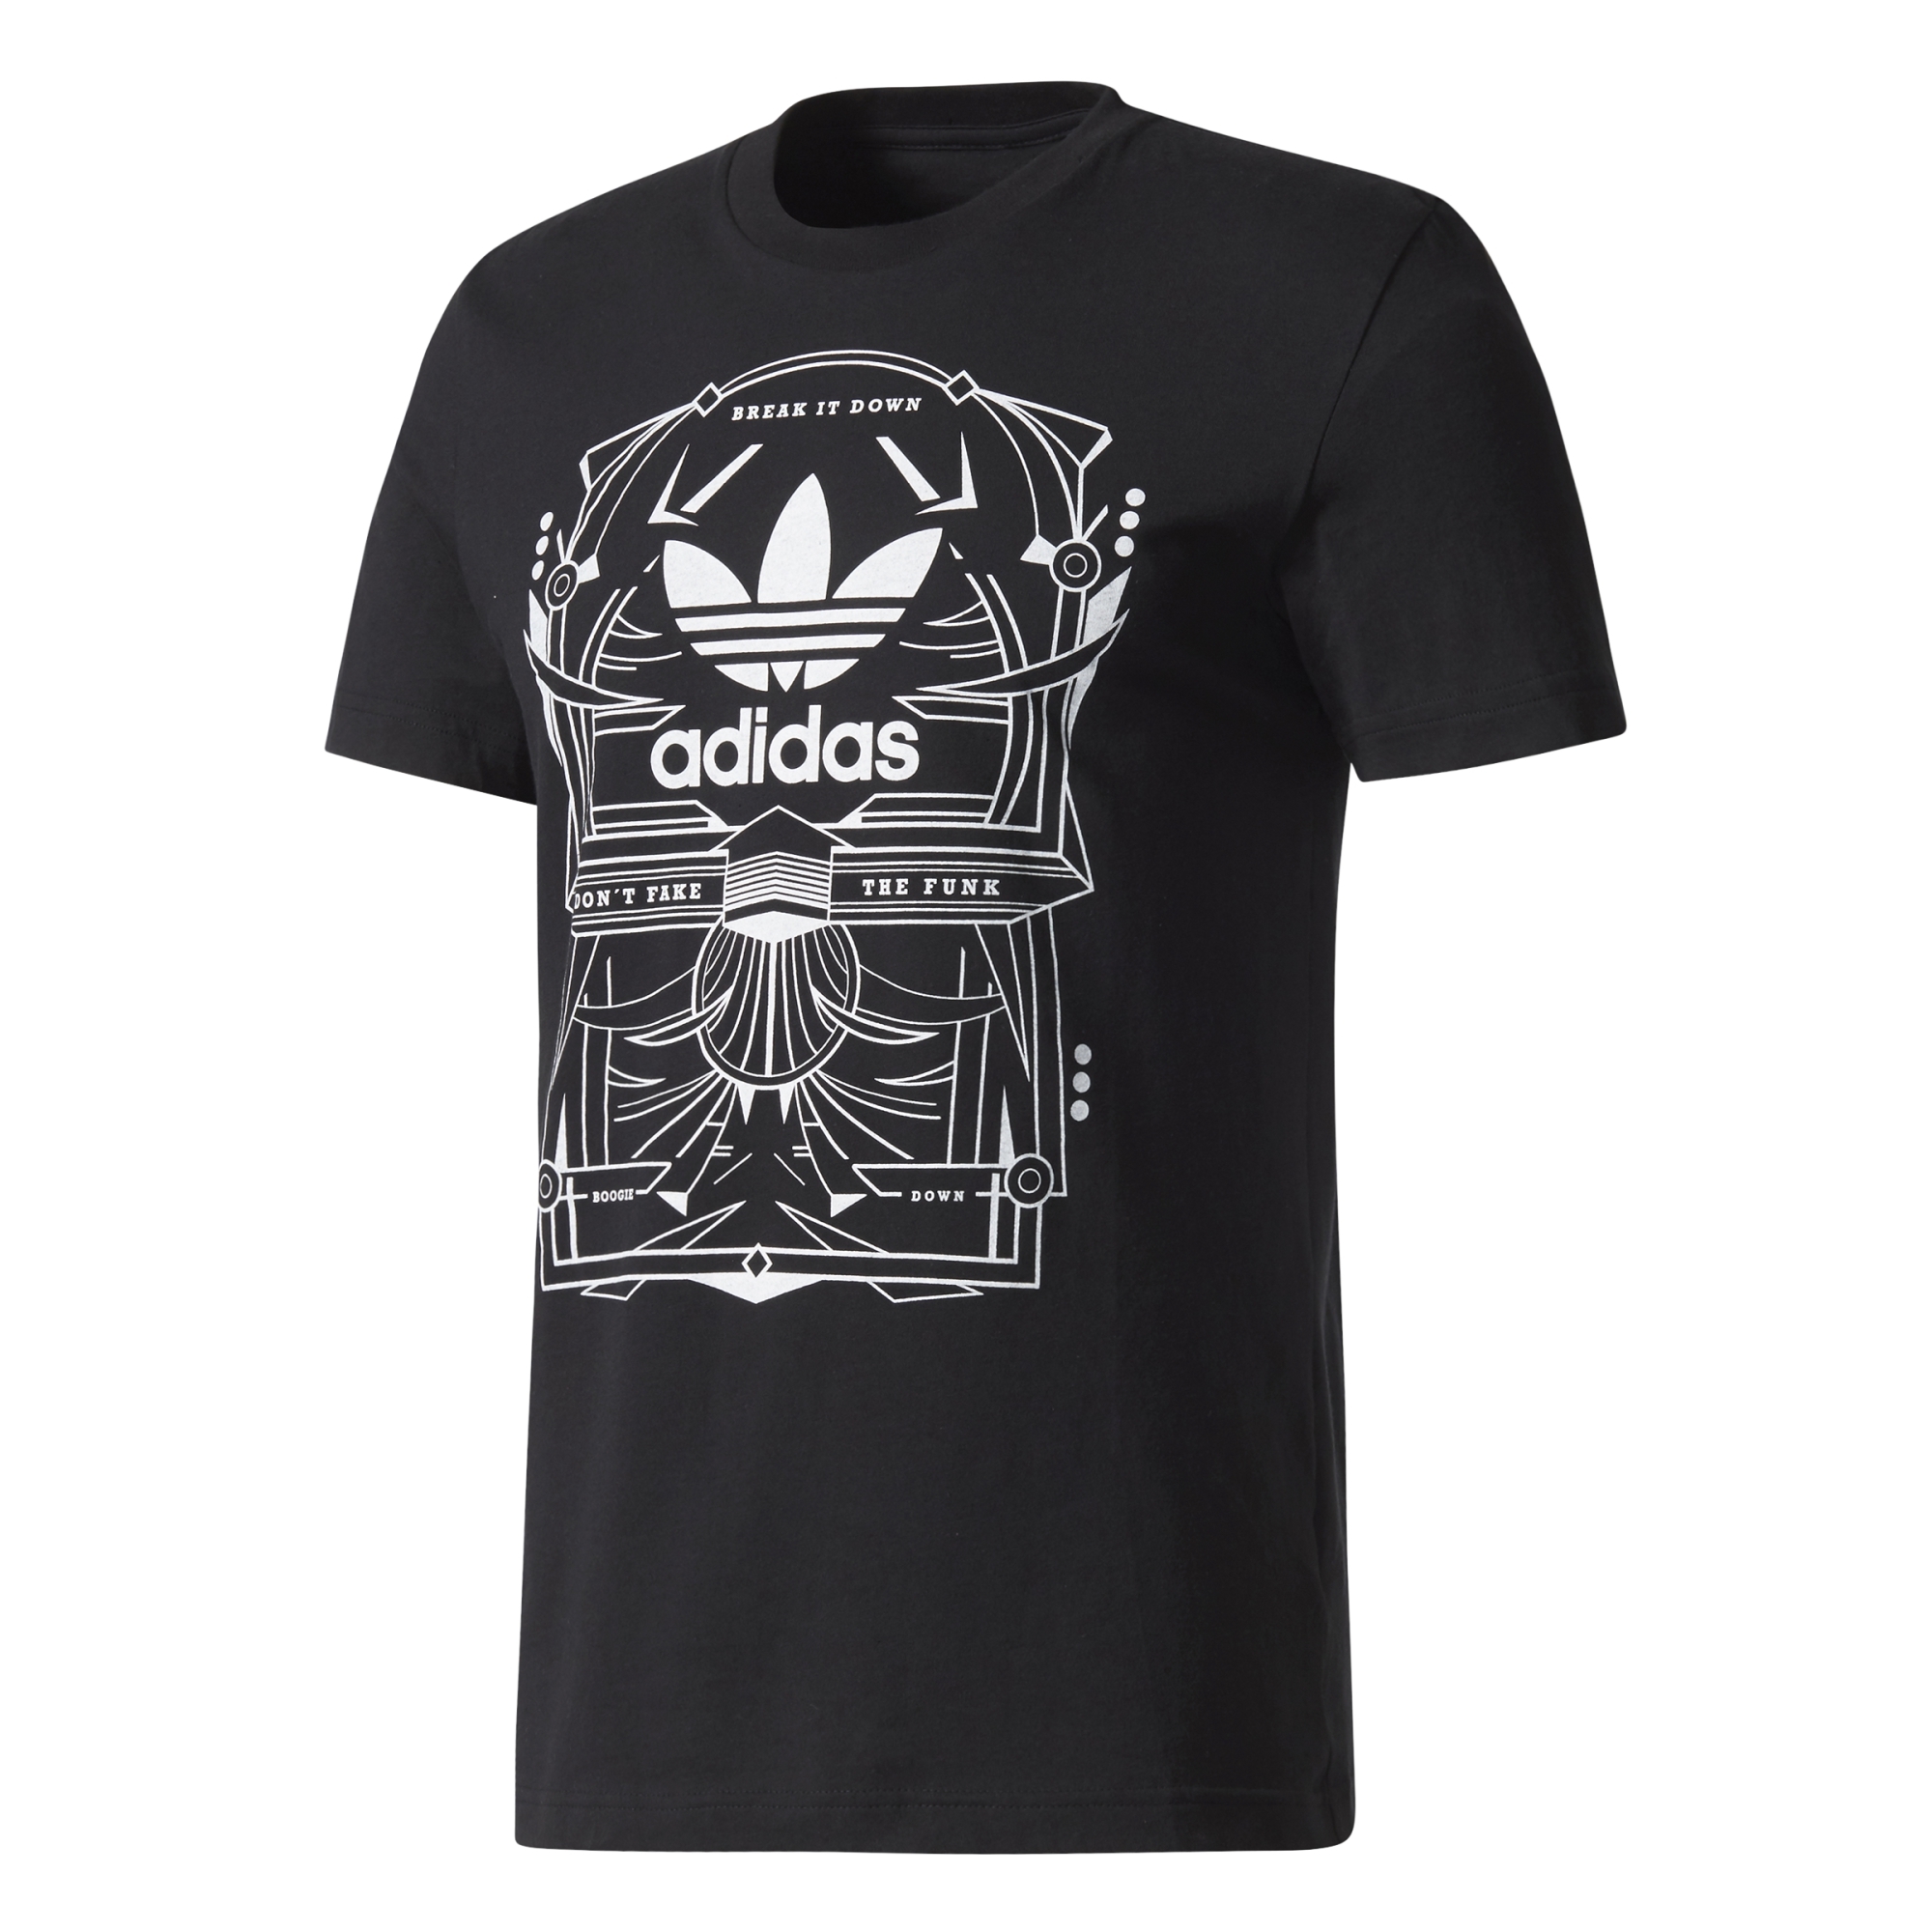 Adidas Originals Rectangle Tee "Boogie down" (black)